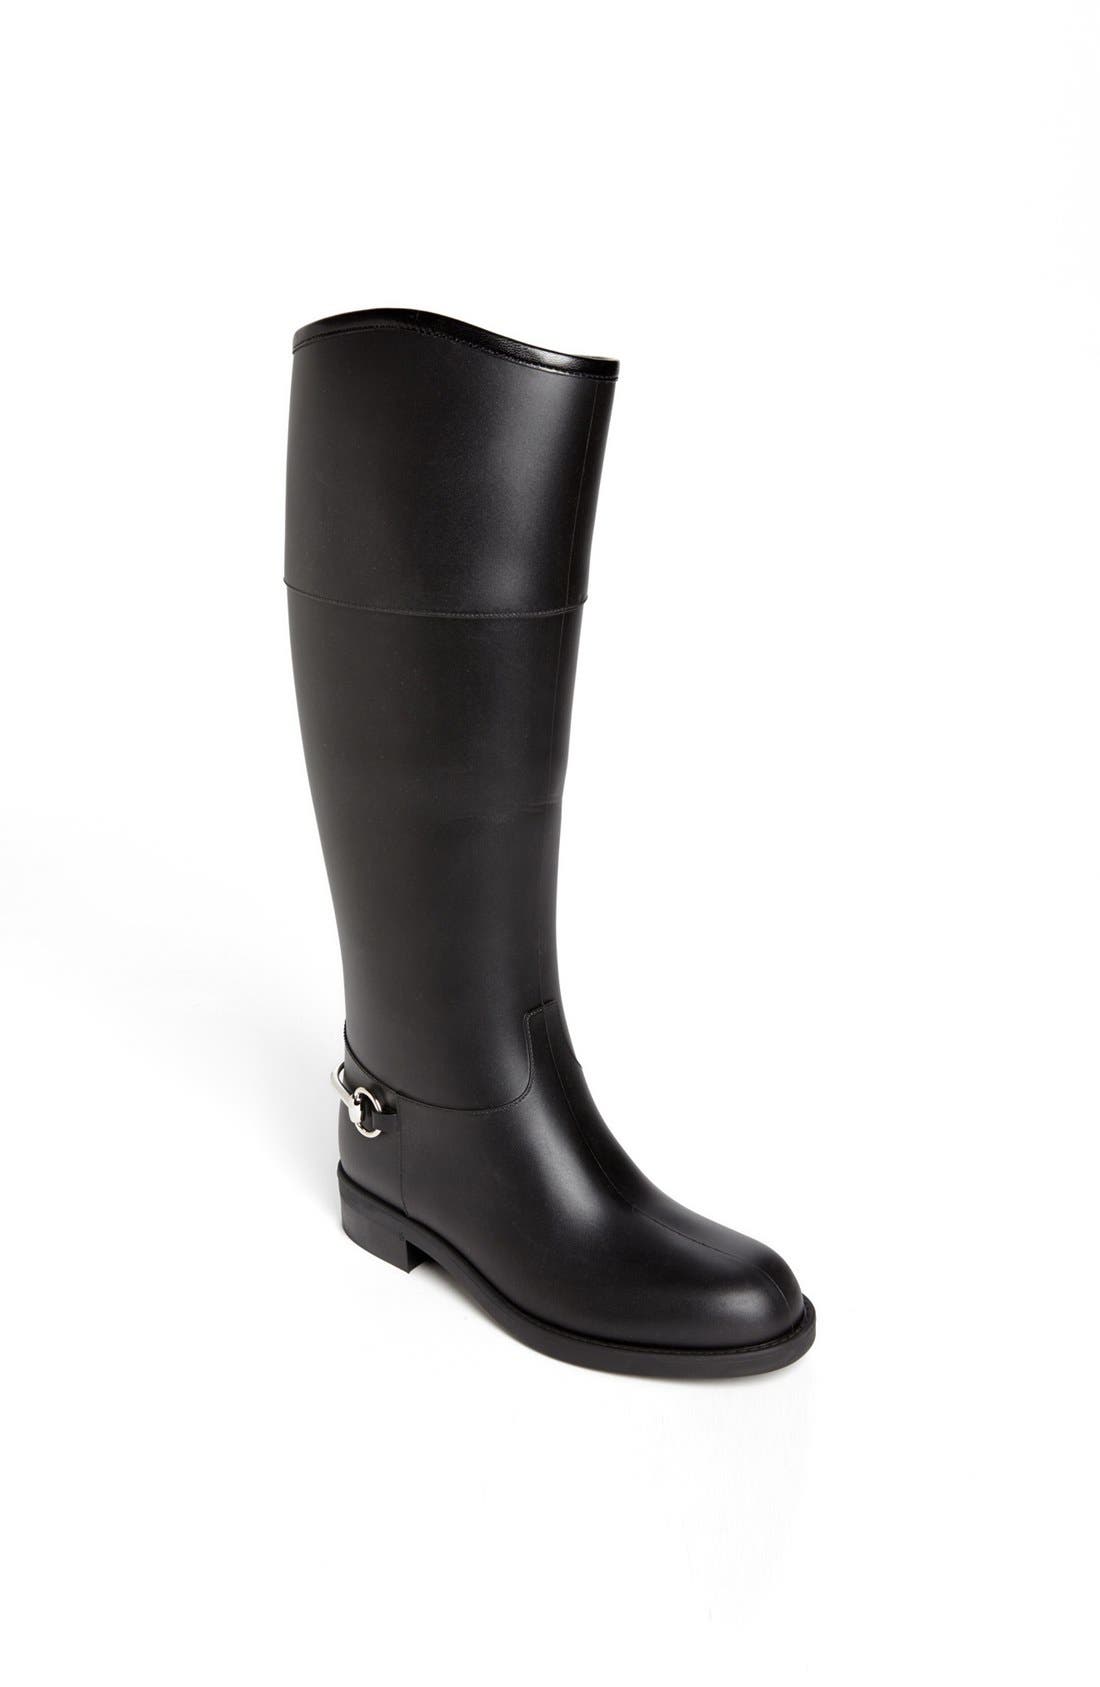 gucci rain boots nordstrom